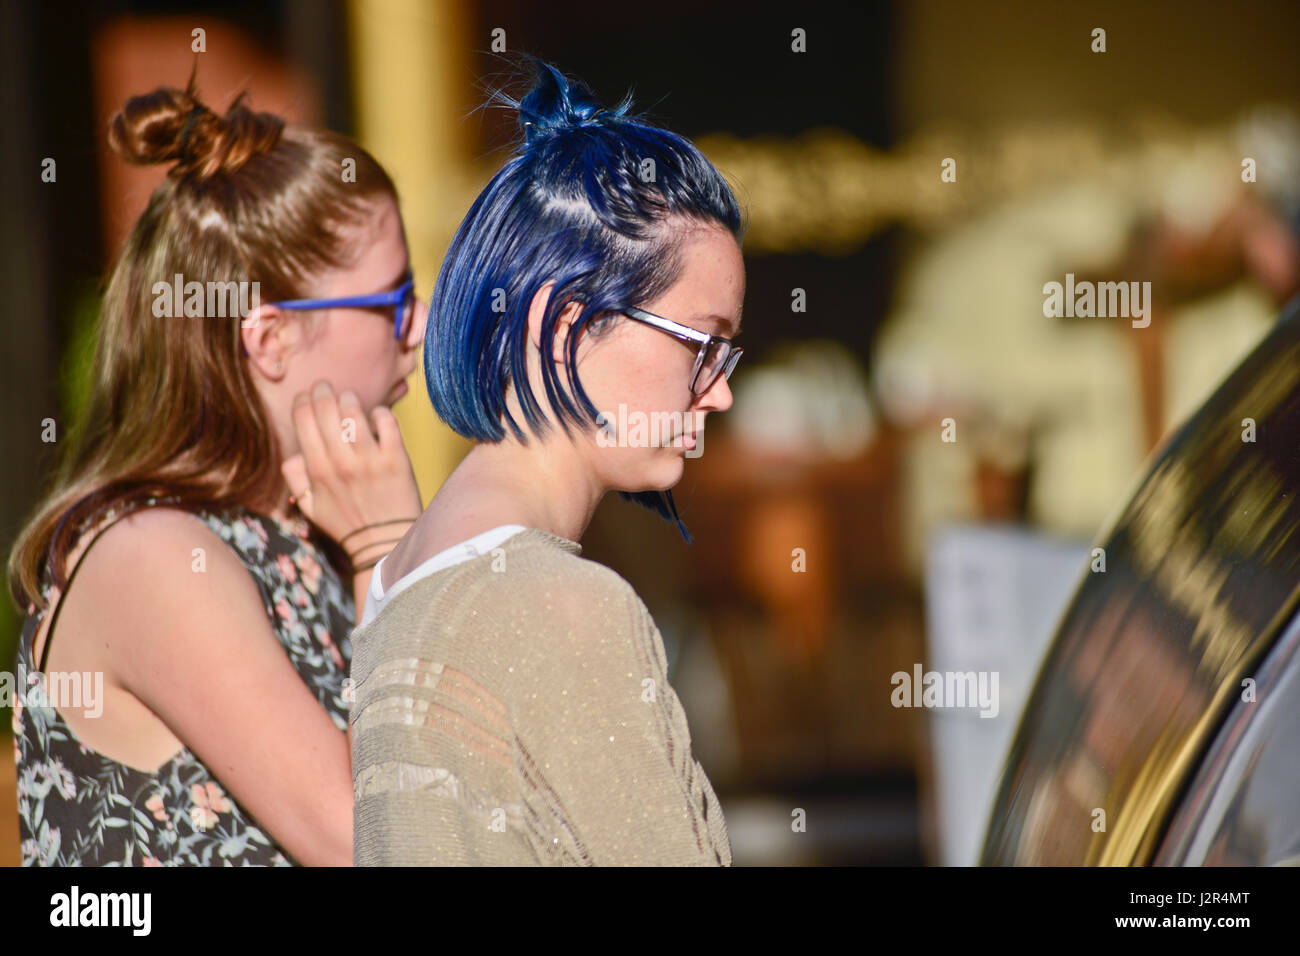 Una chica con cabello azul compras para icecream Foto de stock